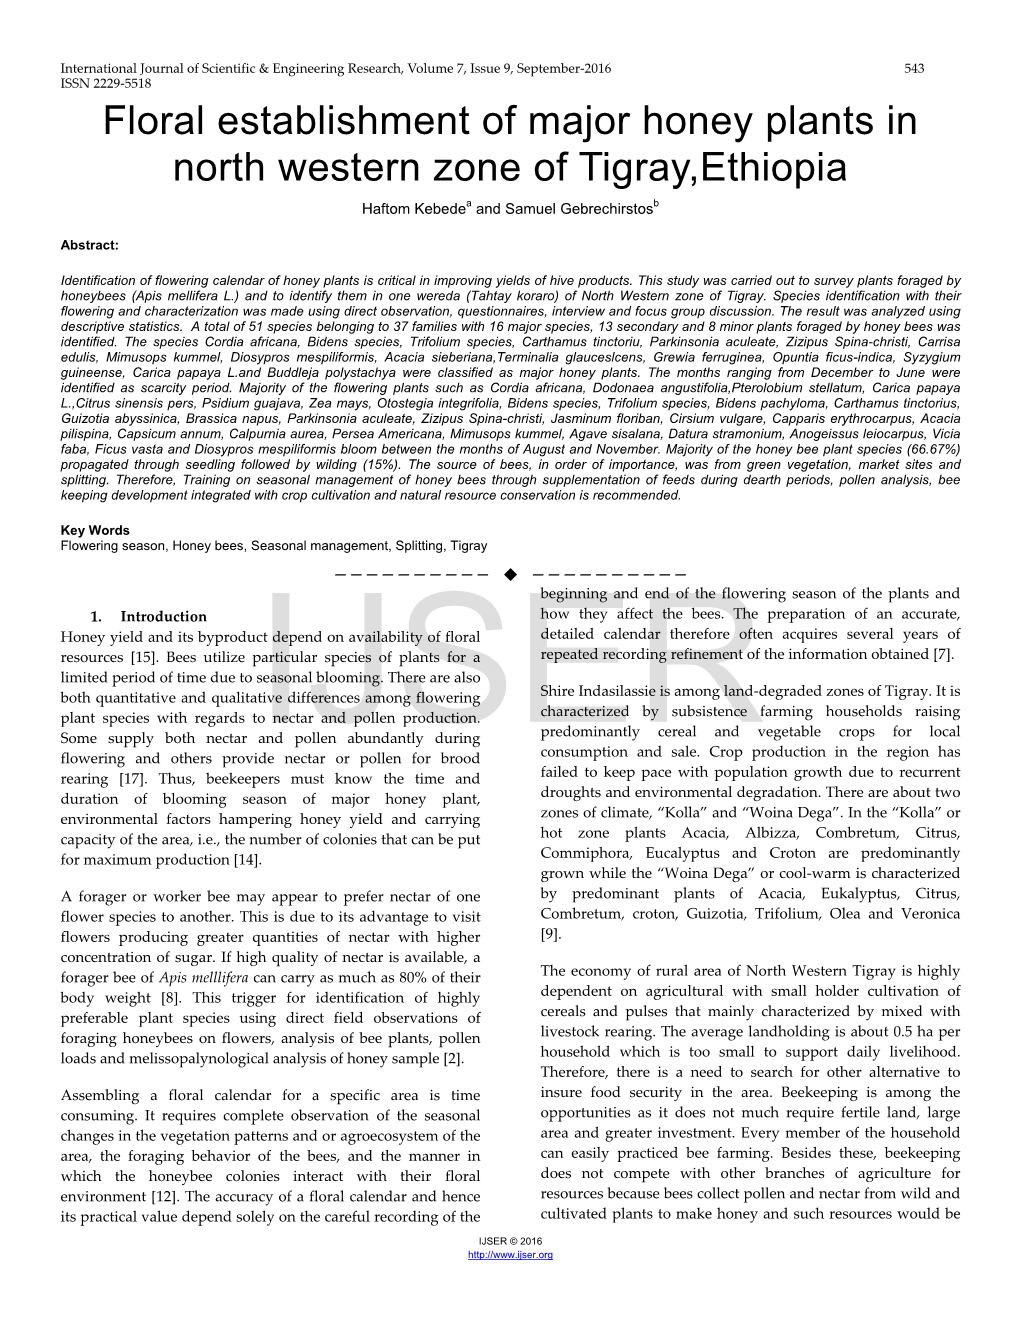 Floral Establishment of Major Honey Plants in North Western Zone of Tigray,Ethiopia Haftom Kebedea and Samuel Gebrechirstosb